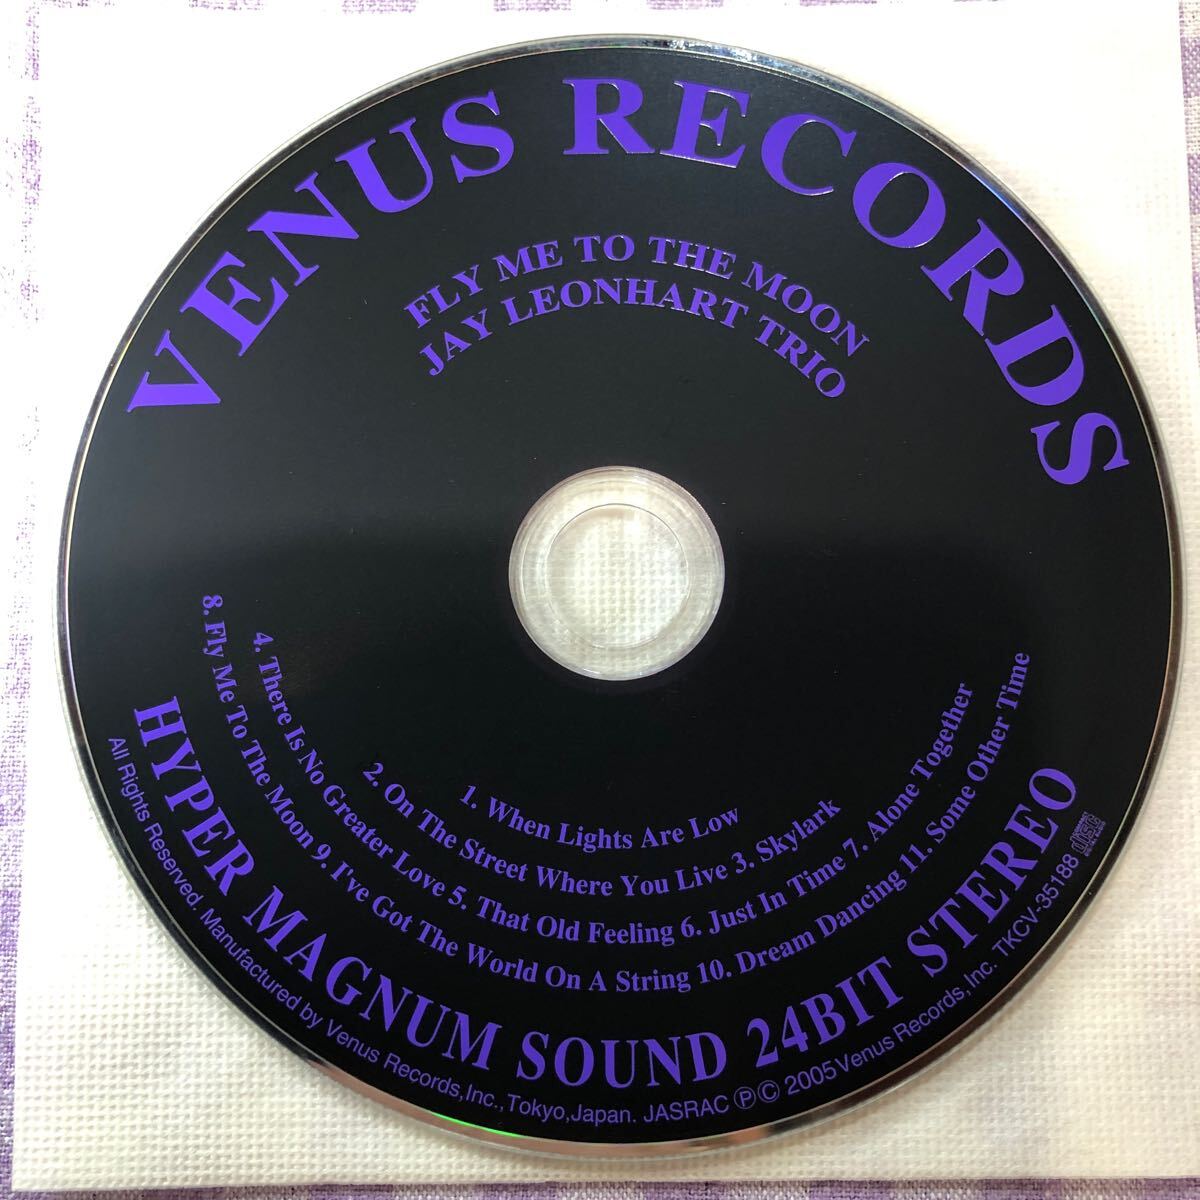  бумага jacket venus CD| fly *mi-*tu* The * moon | J * Leon Heart * Trio (be колено * зеленый, Joe * кукуруза ) 2003 год запись 